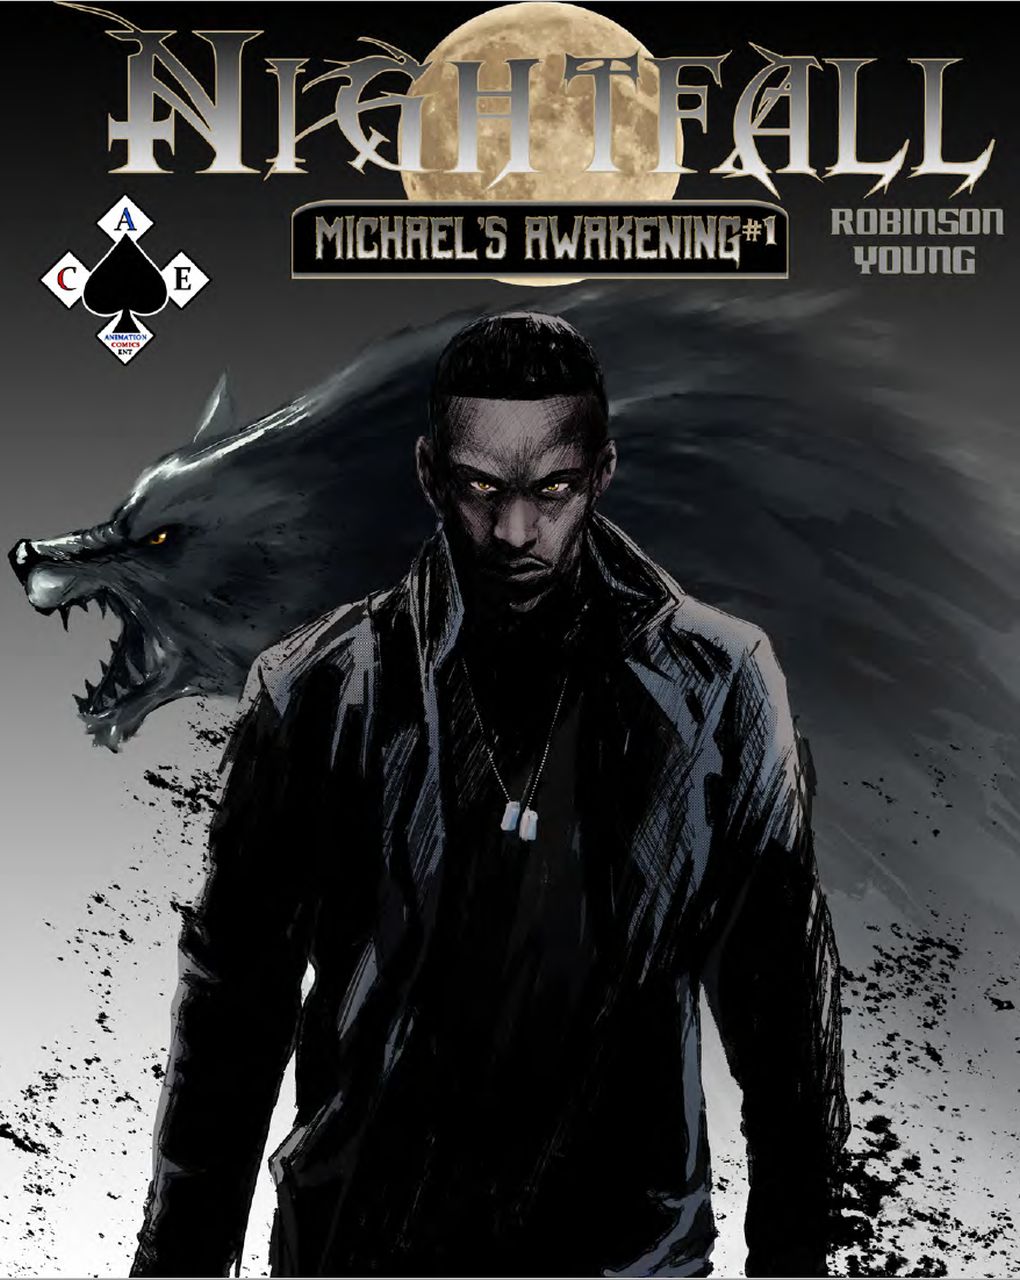 Nightfall - Michael's Awakening #1, cover rev1